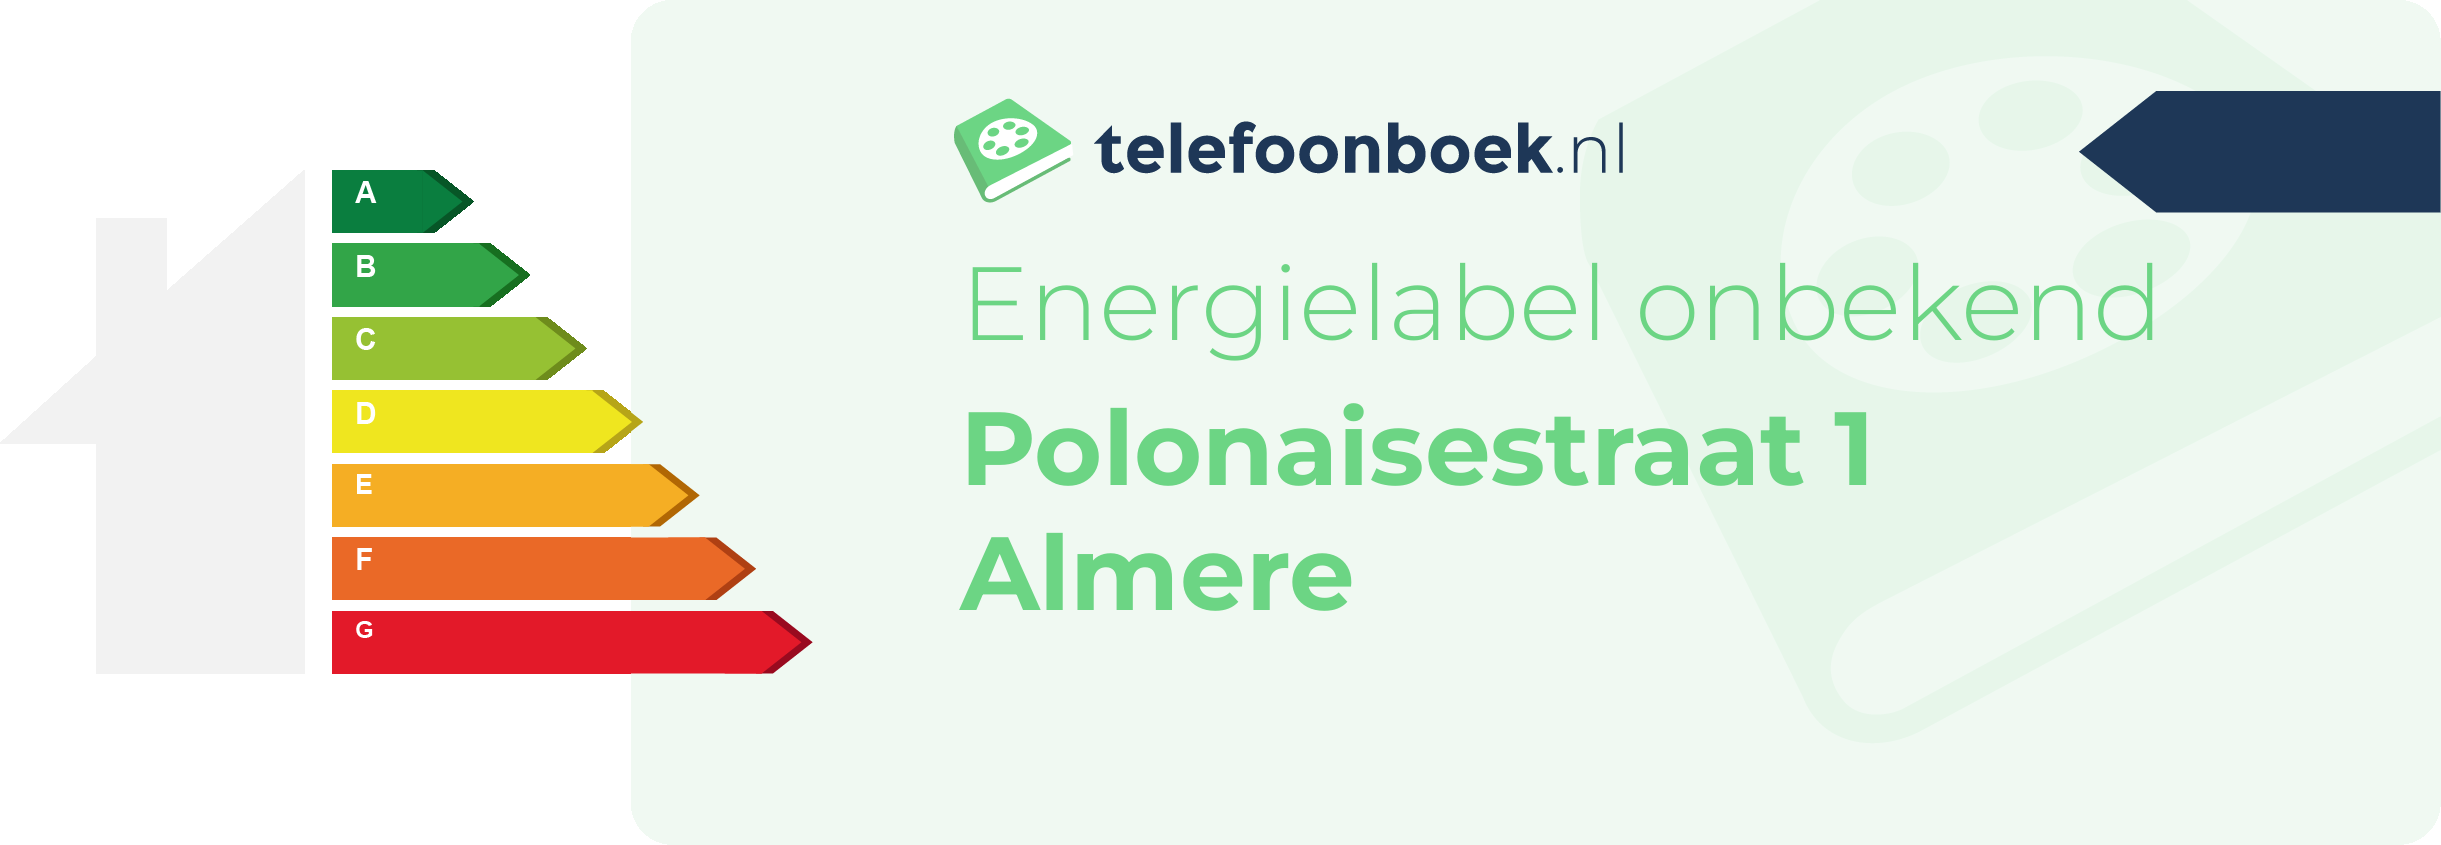 Energielabel Polonaisestraat 1 Almere